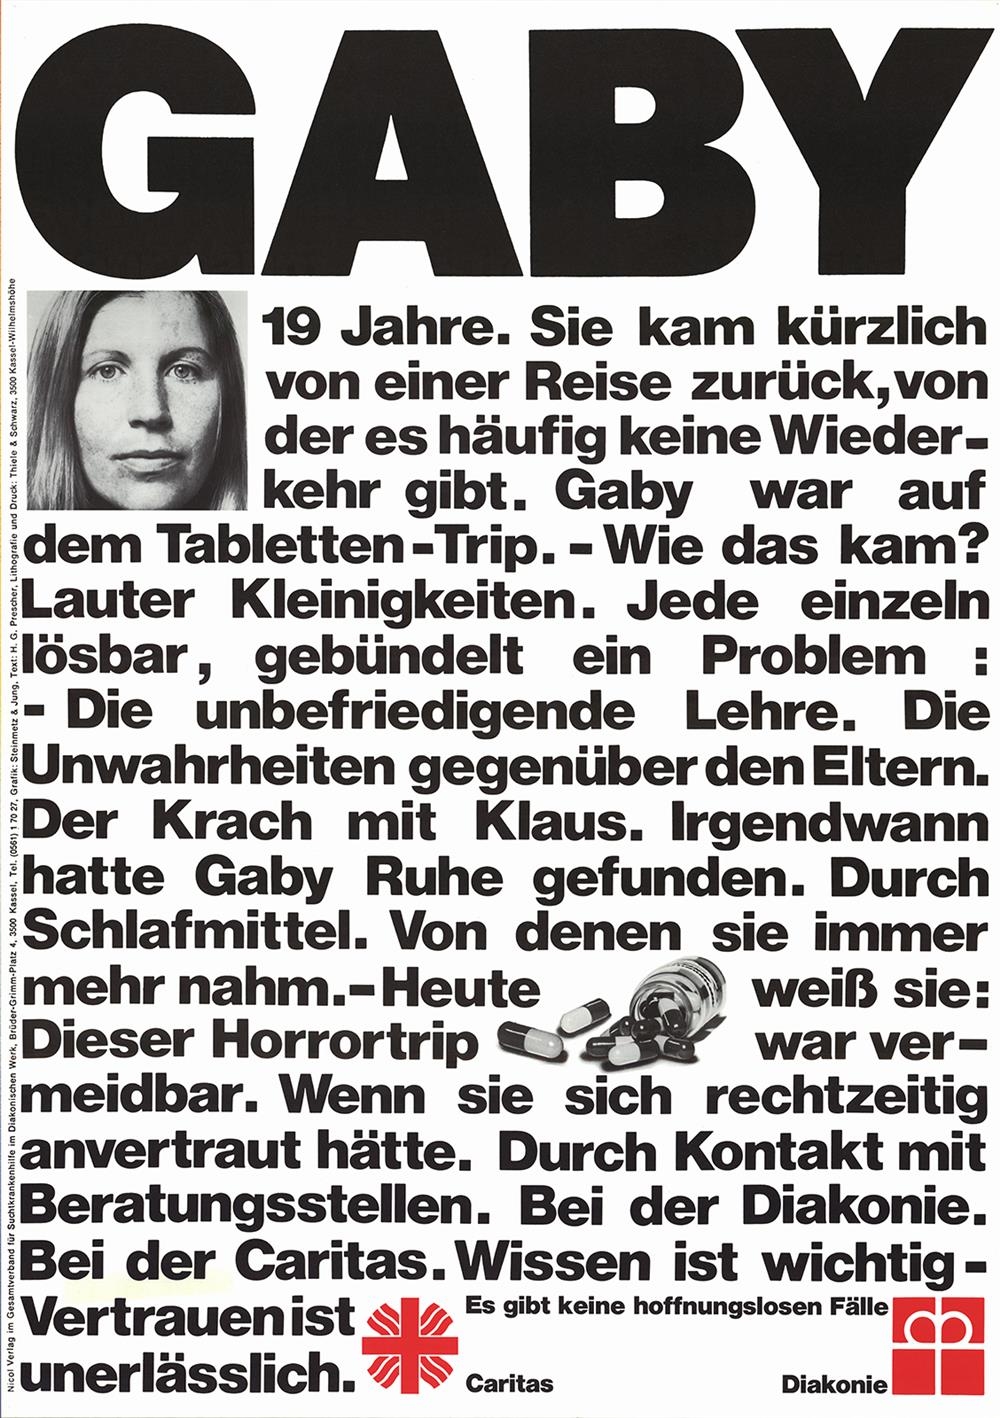 Gaby. Poster der Drogenberatung der Caritas (1978) (Deutscher Caritasverband e. V.)